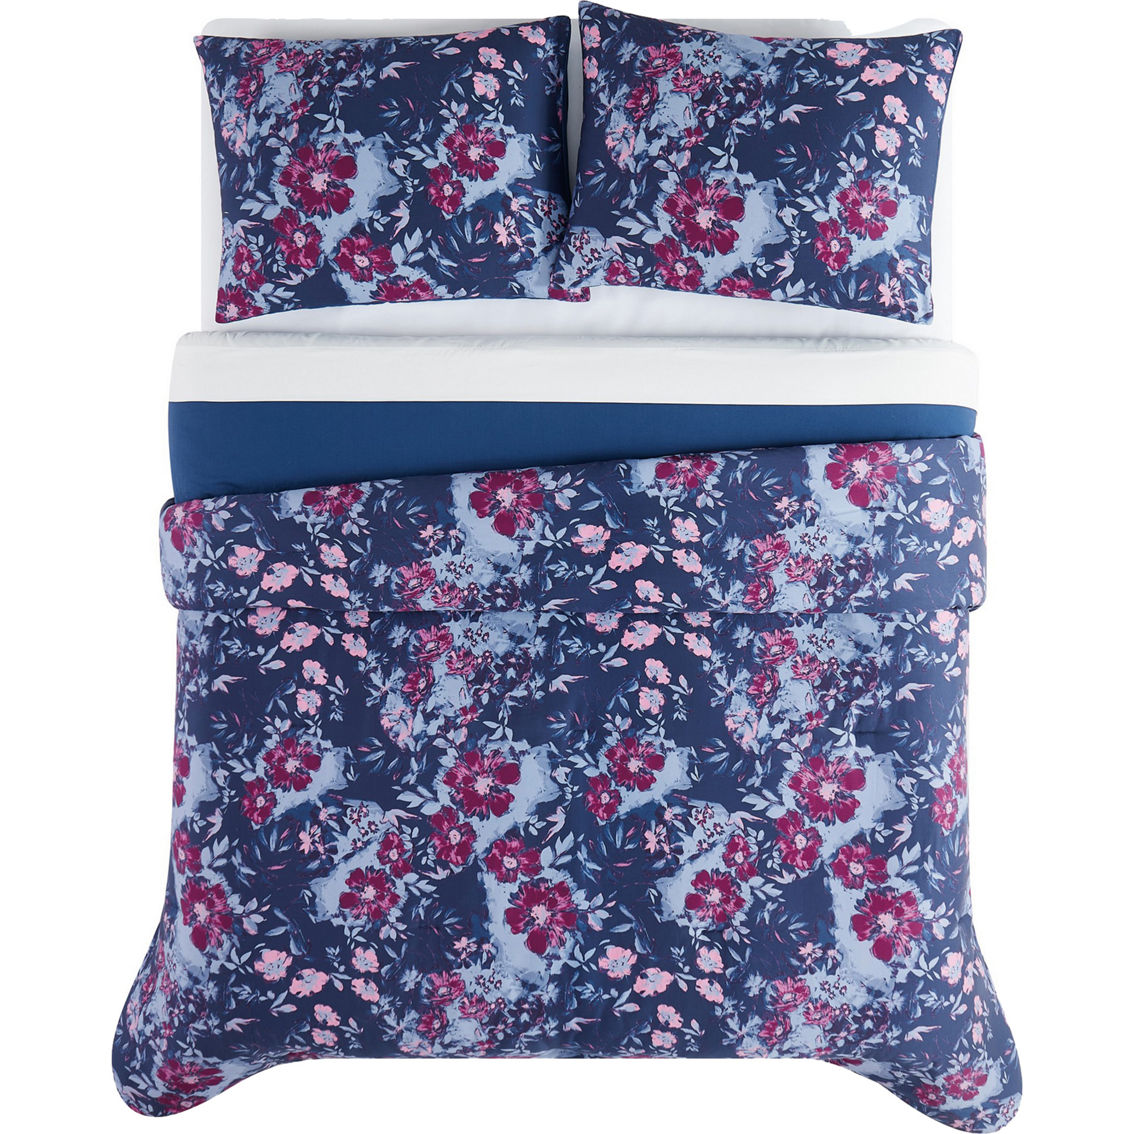 Badgley Mischka Home Midnight Garden Comforter Set | Bedding Sets ...